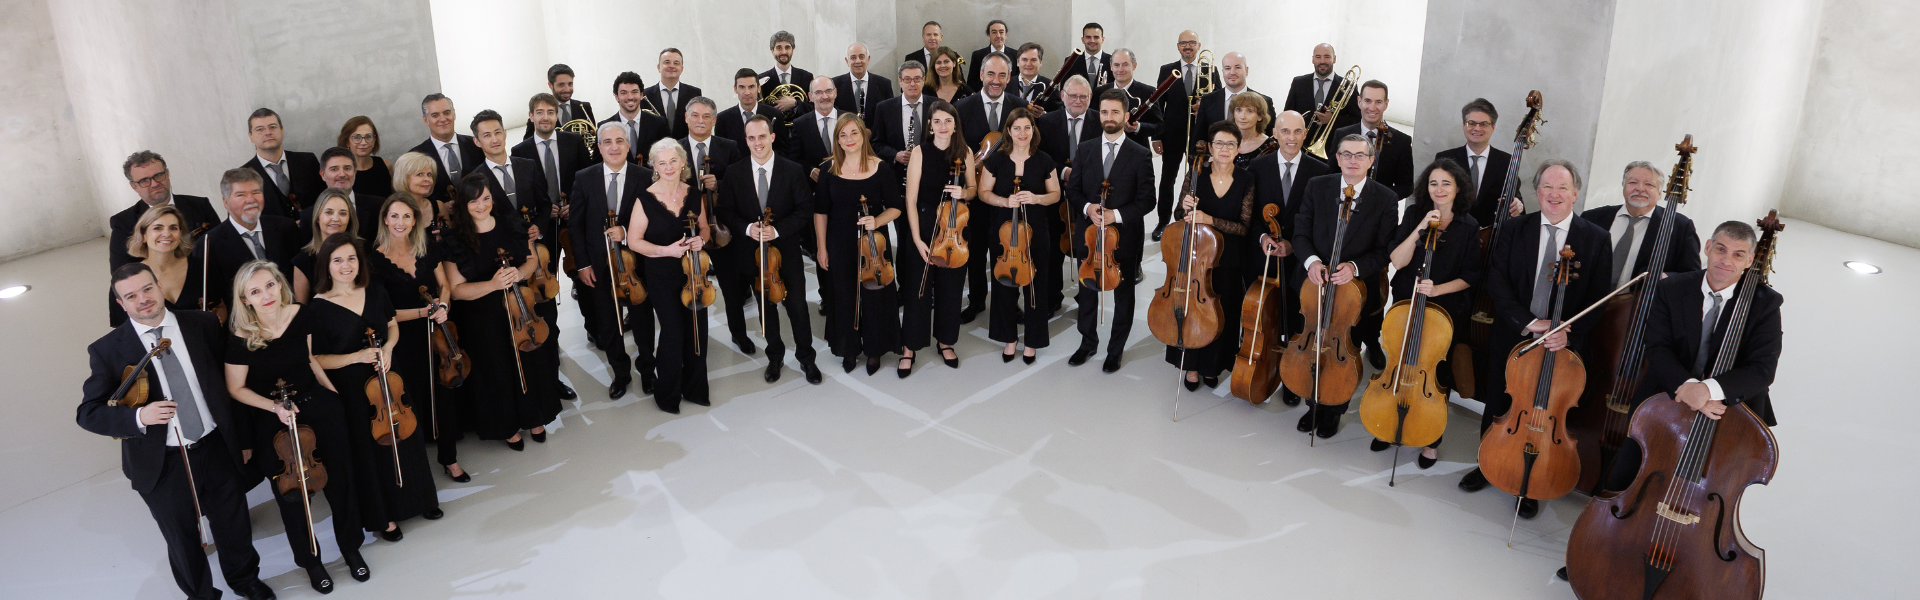 Música : Orquesta Sinfónica de Navarra